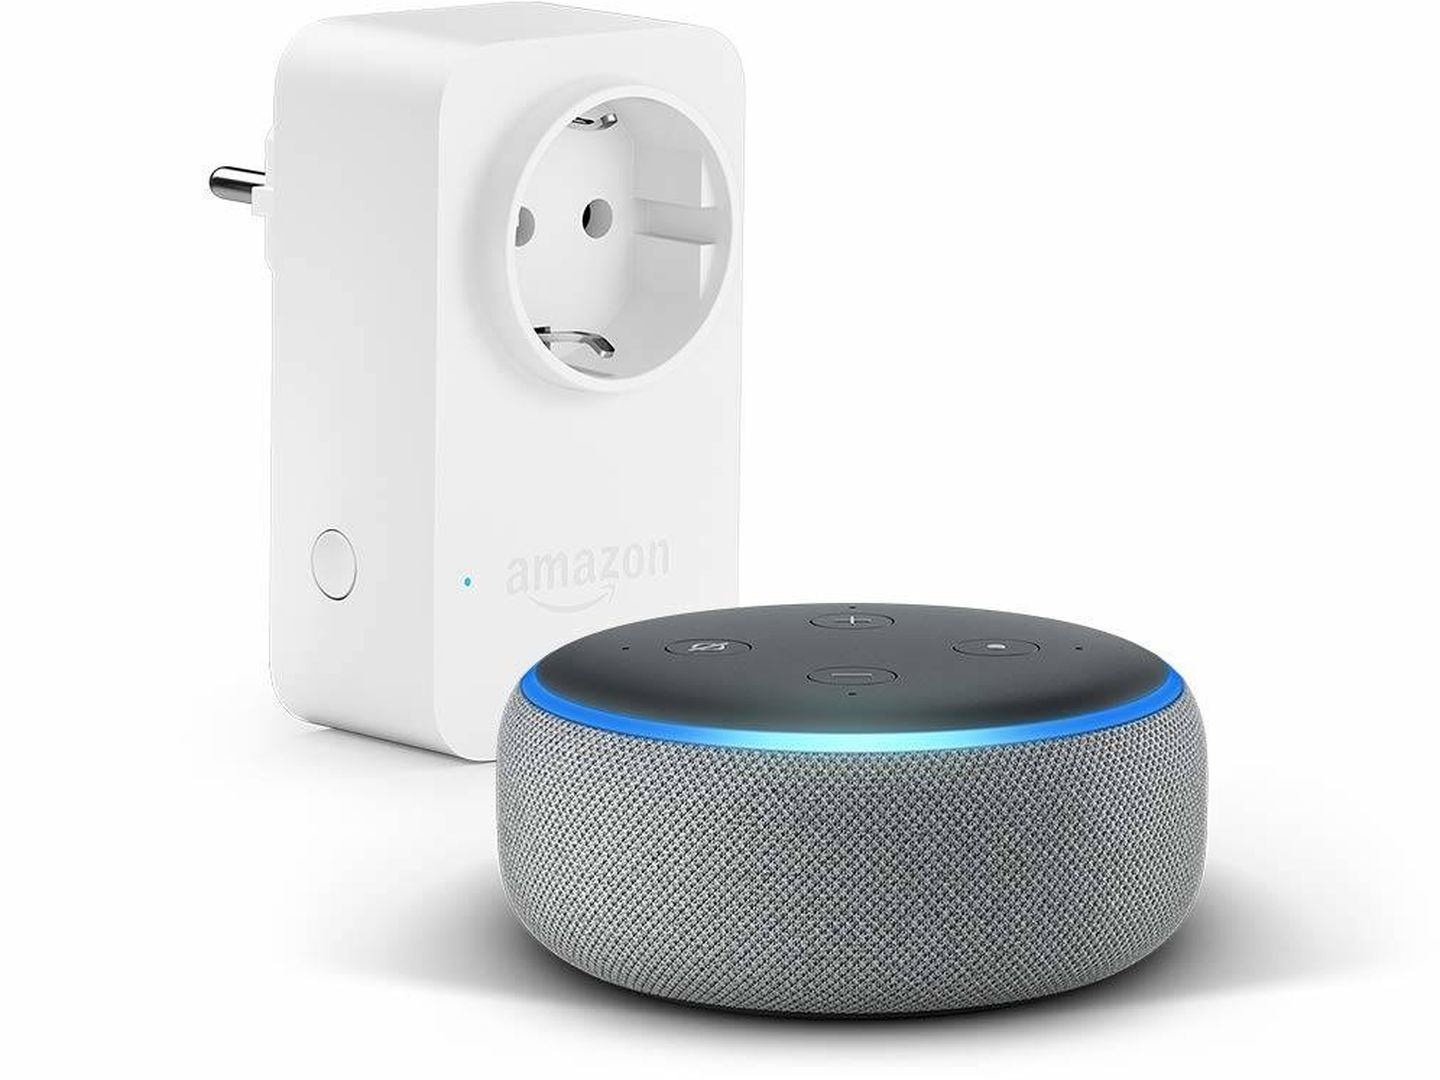 Oferta: altavoz inteligente  Echo Dot por 39 euros